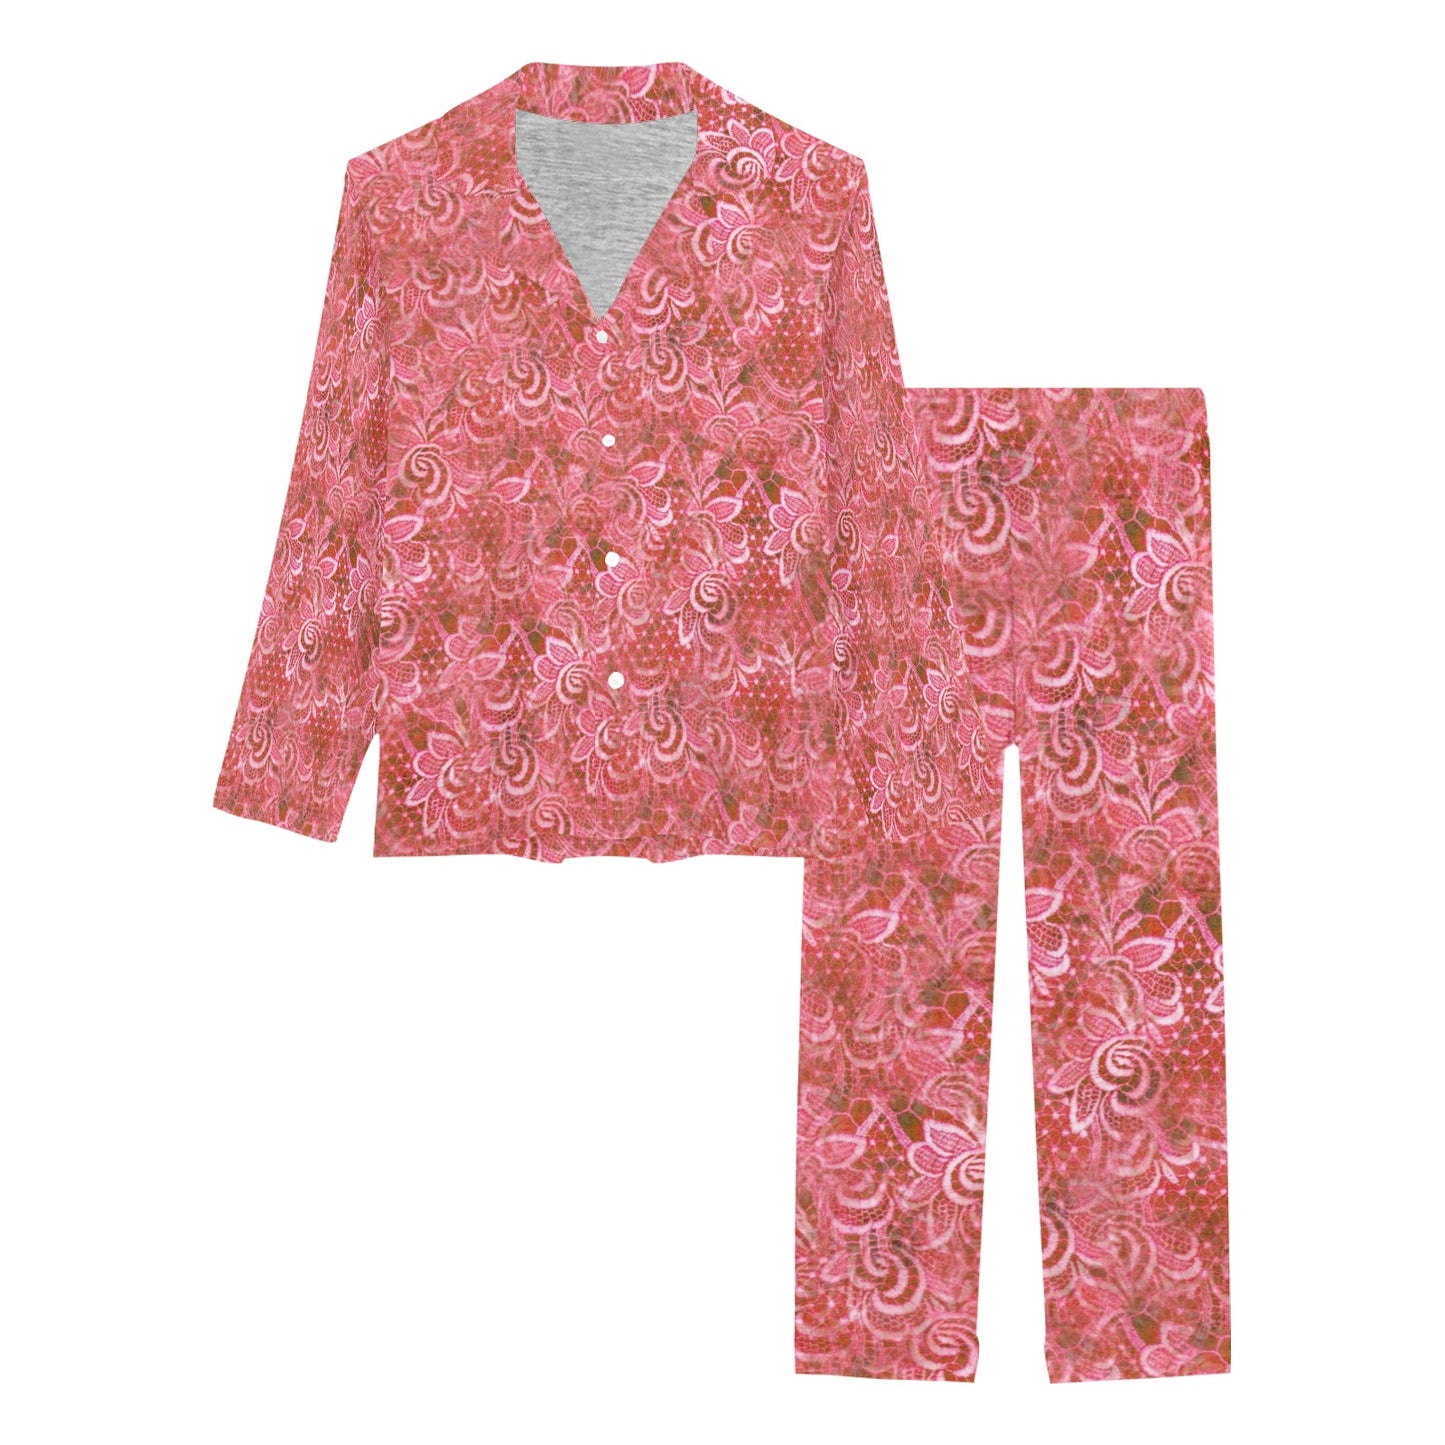 Victorian printed lace pajama set, design 33 Women's Long Pajama Set (Sets 02)